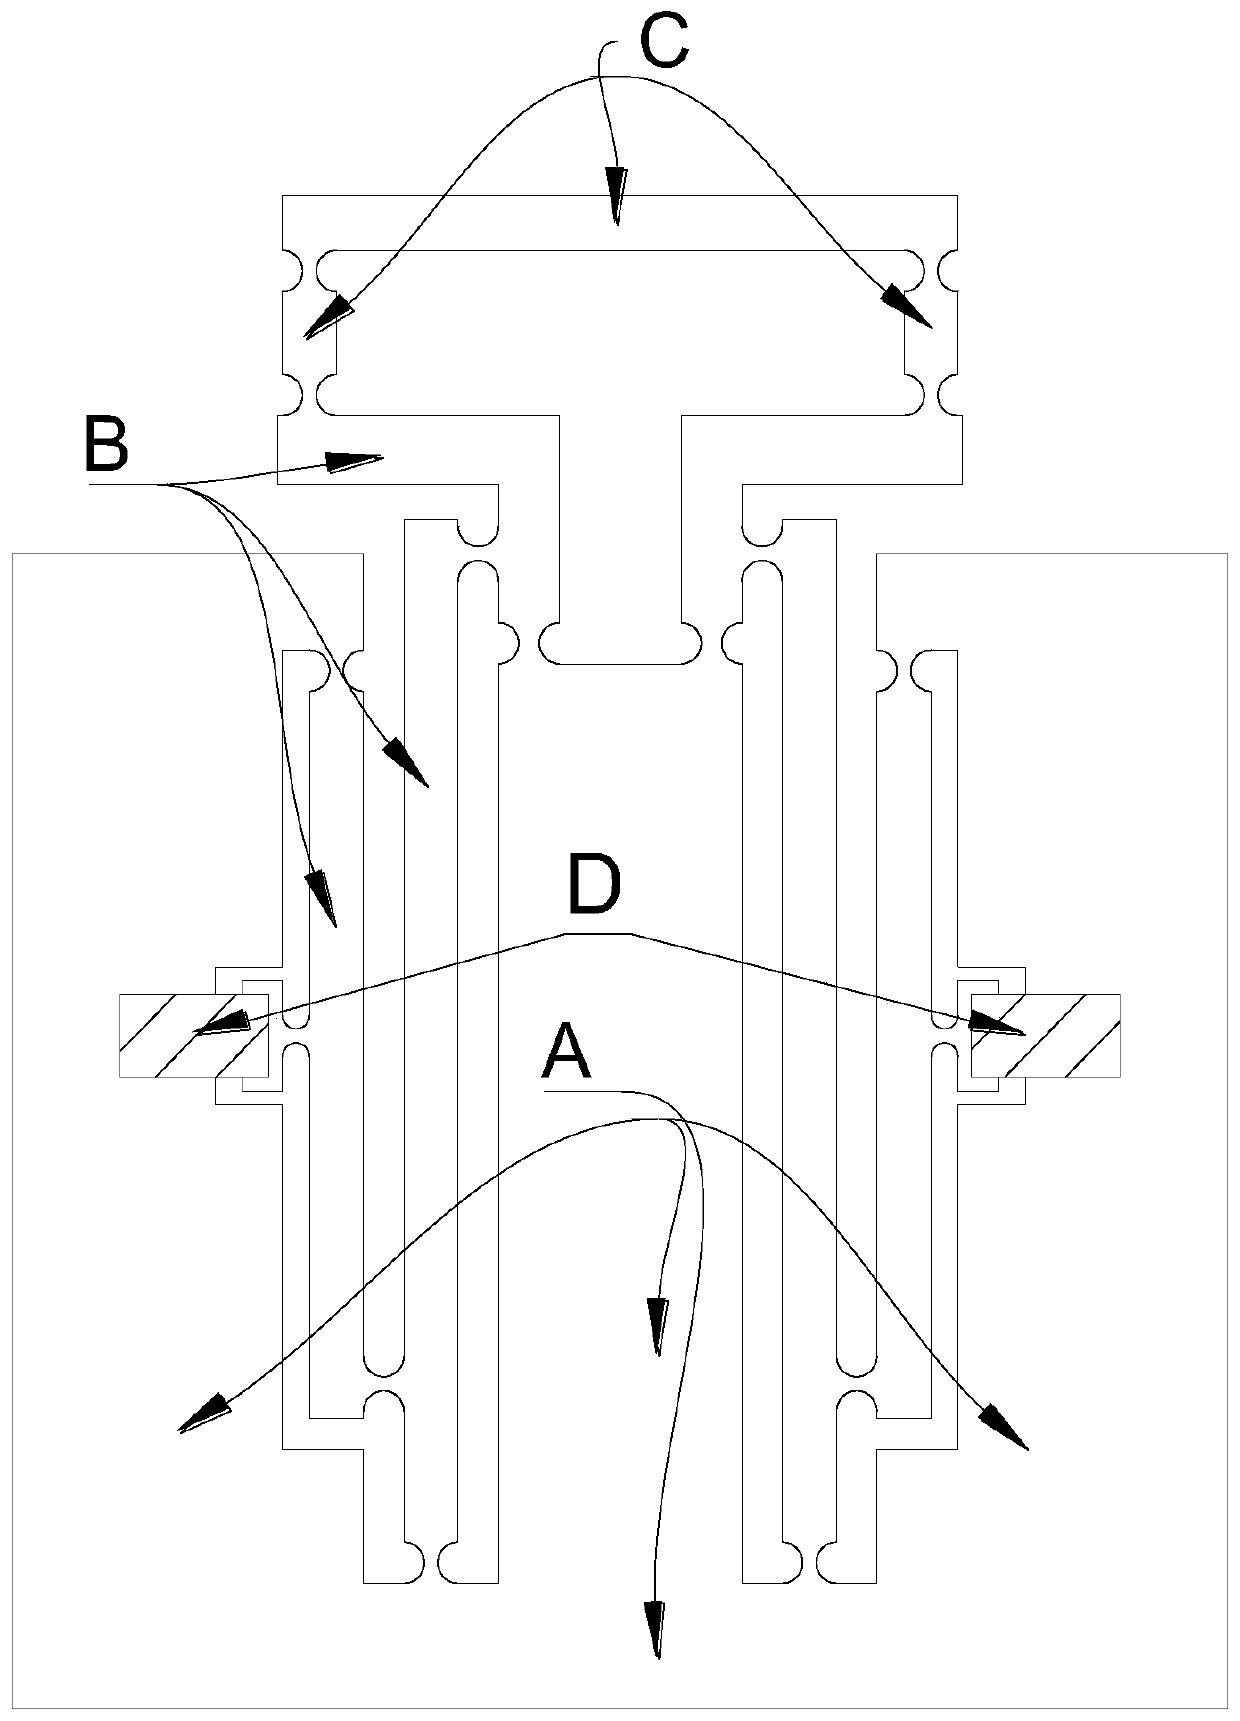 Full-flexible hinge micro-displacement amplification mechanism